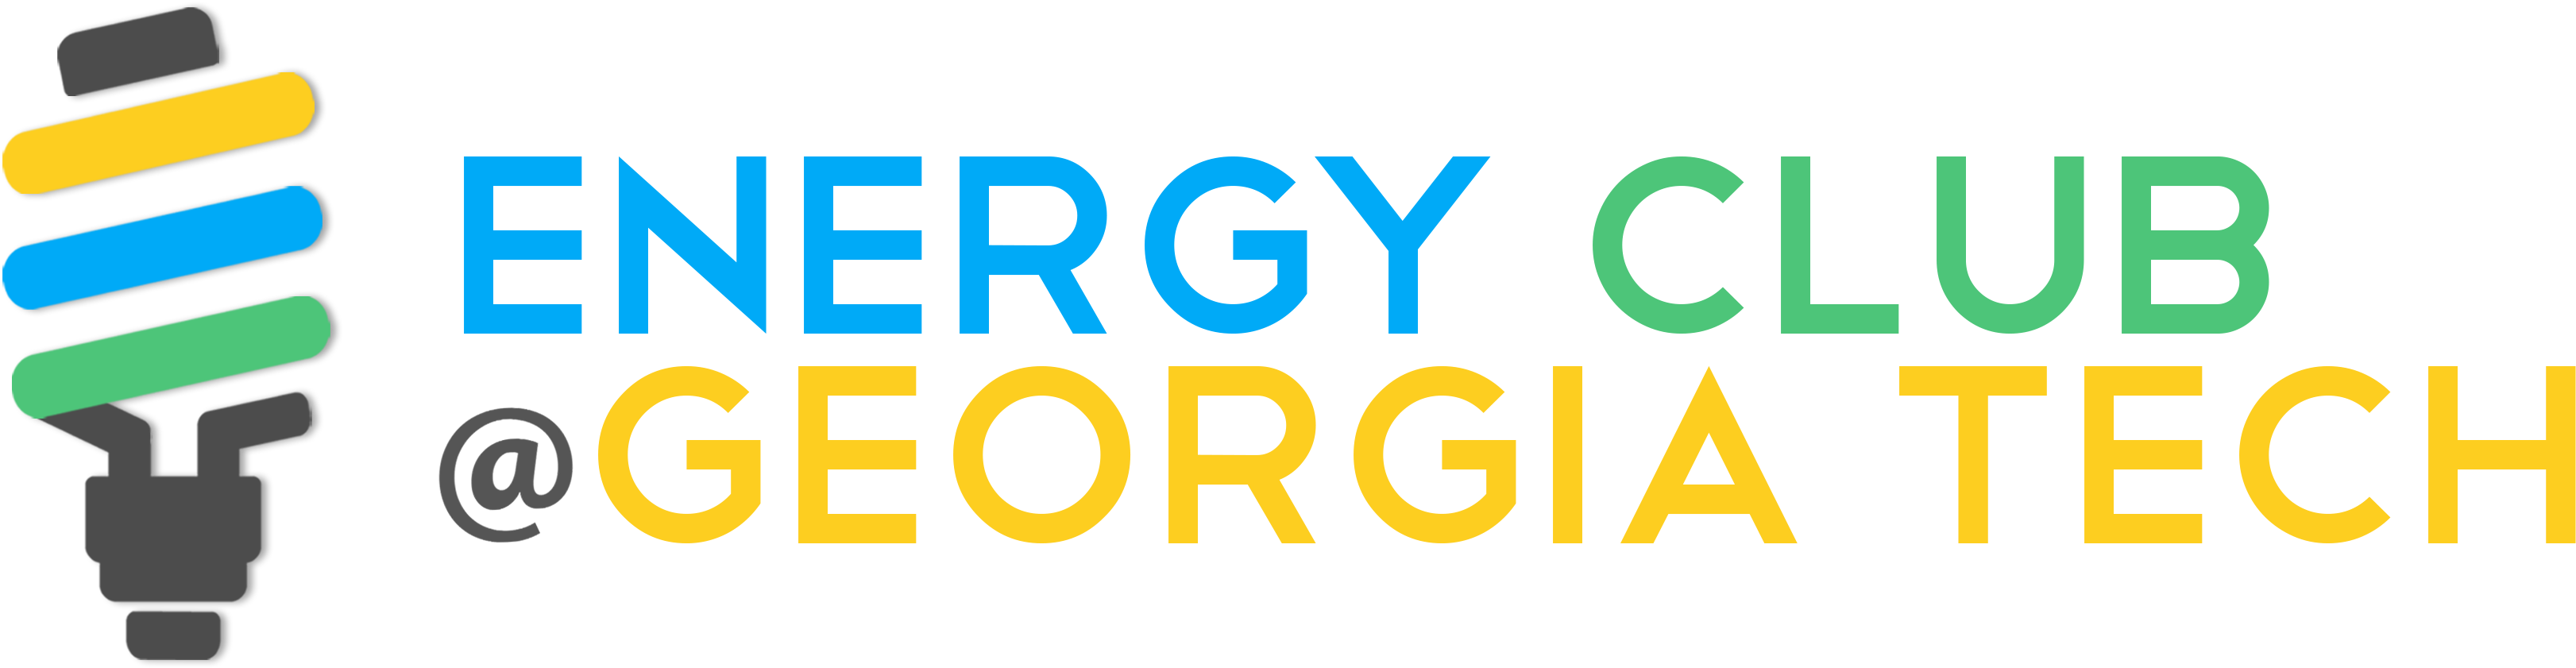 Energy Club Georgia Tech Logo PNG